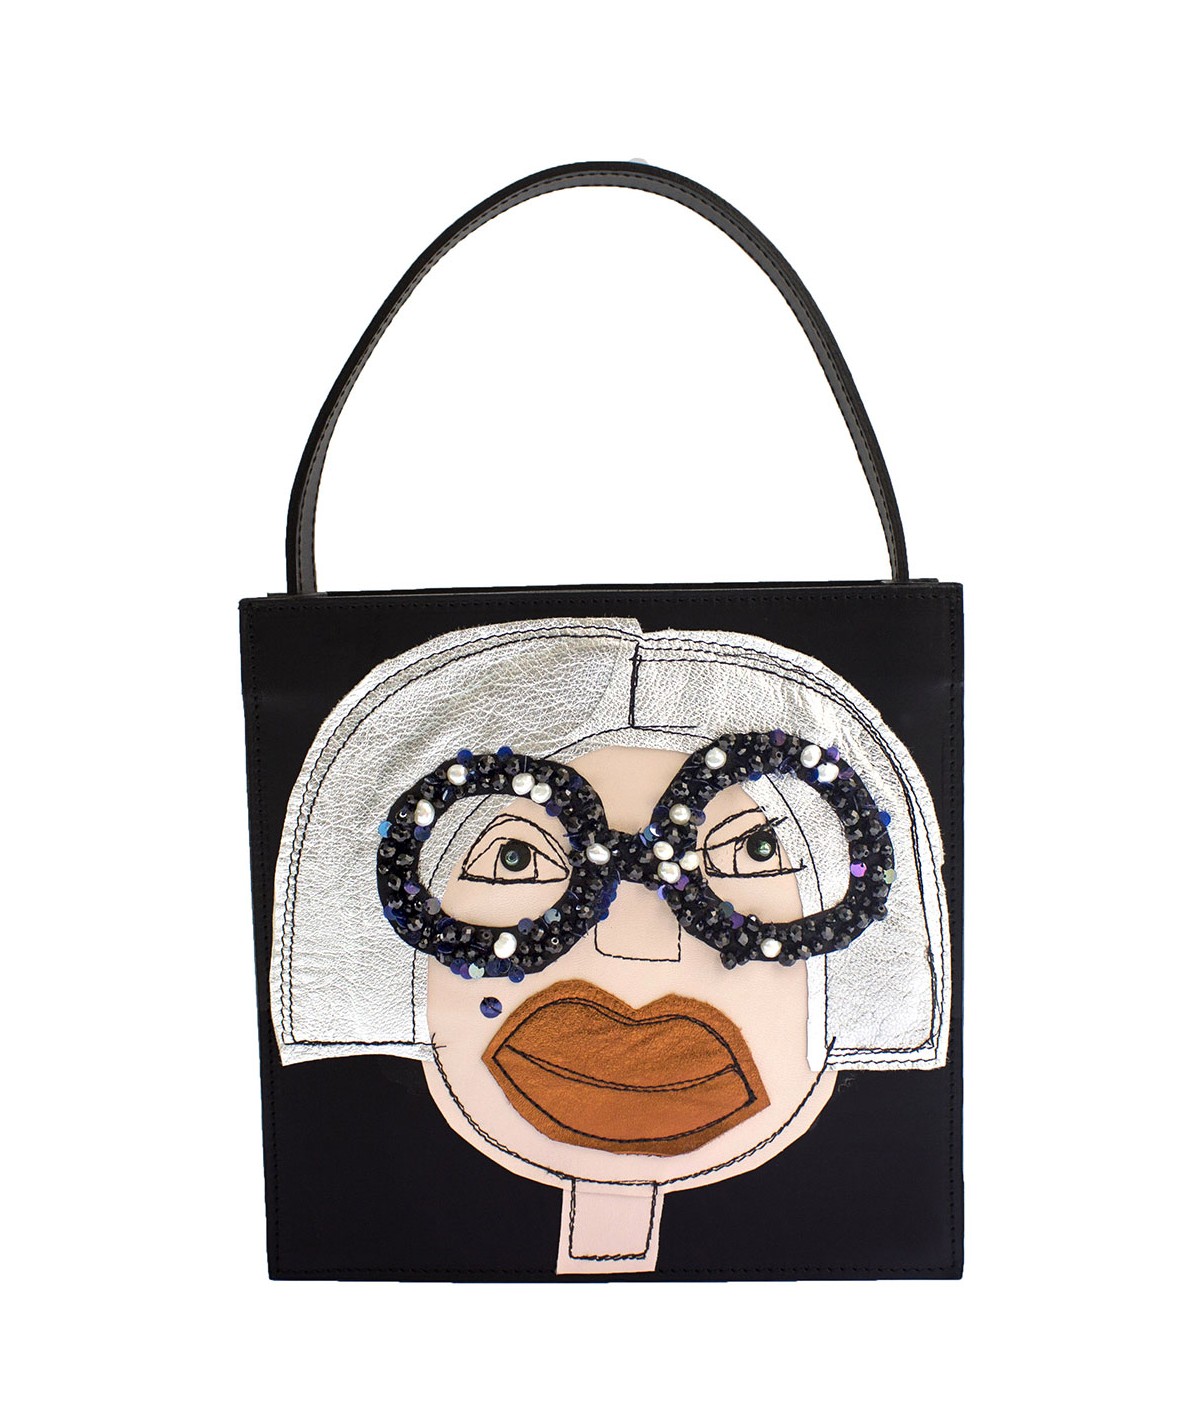 Maria - leather handbag